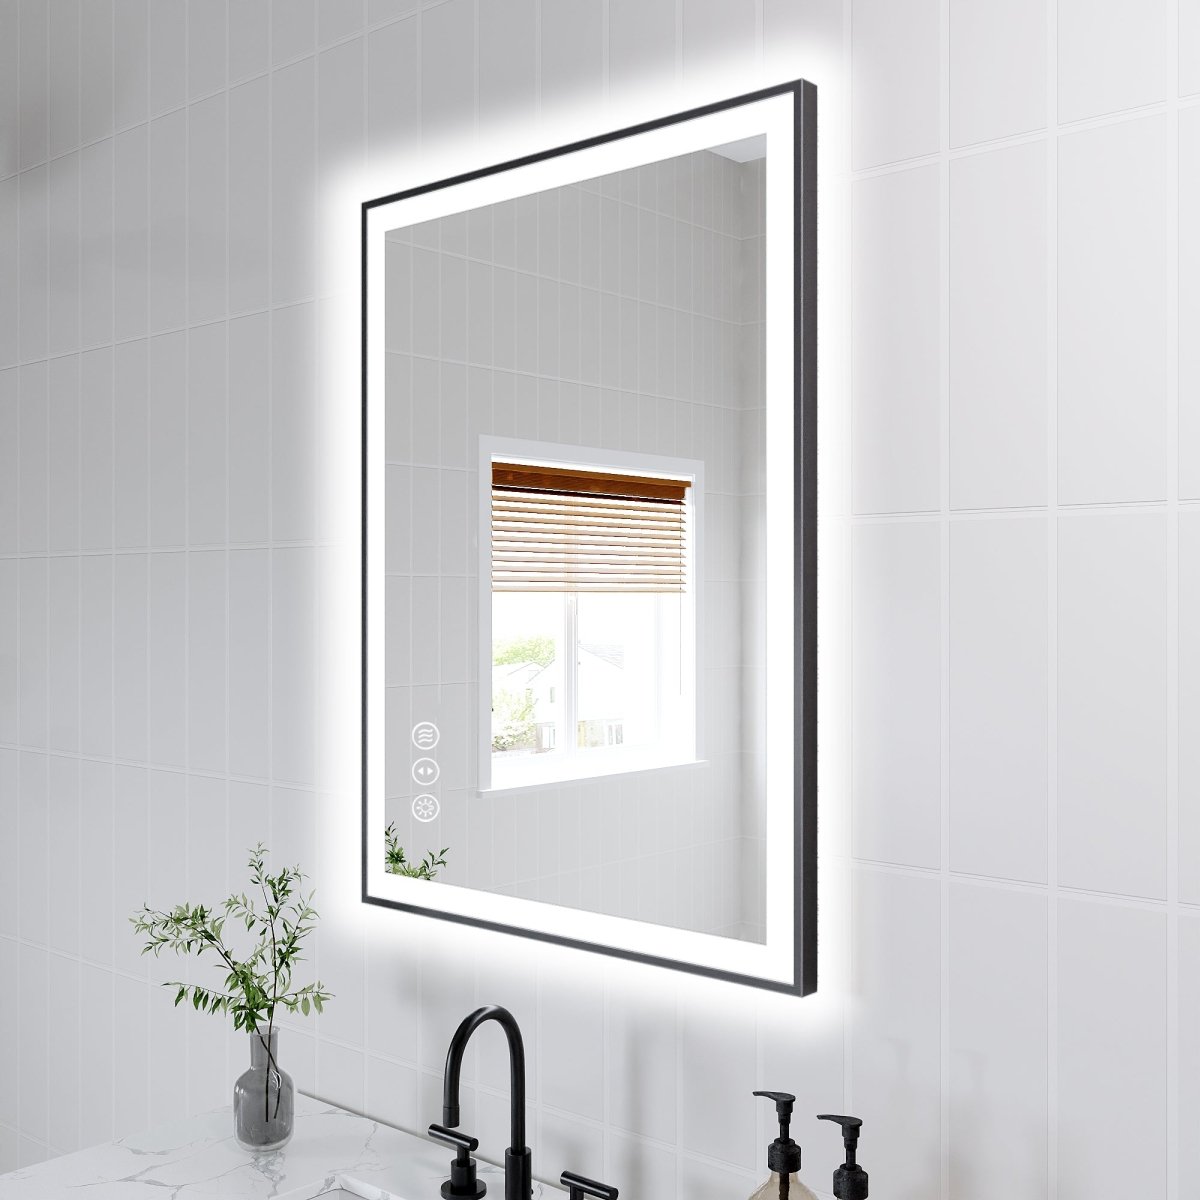 Apex-Noir 24"x32" Framed LED Lighted Bathroom Mirror